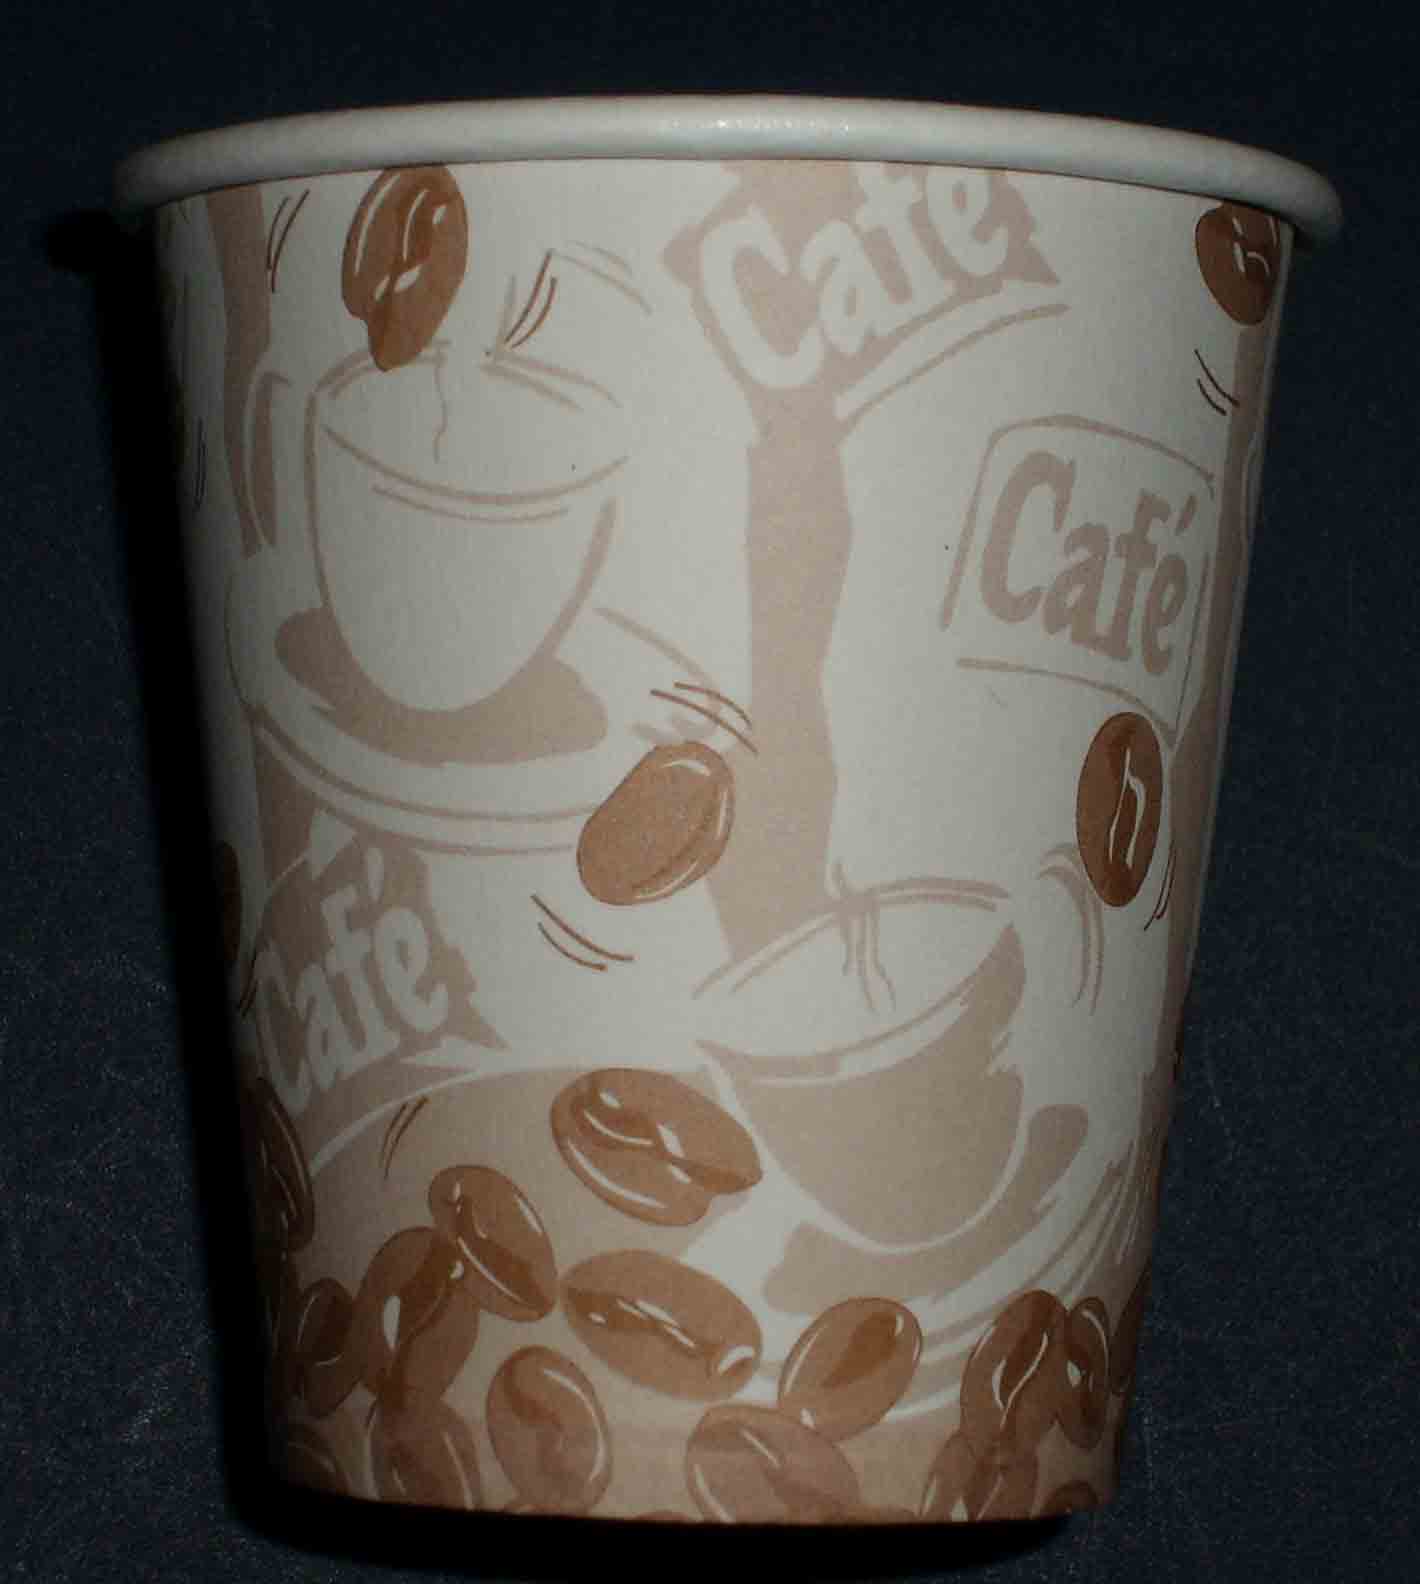  Coffee Cups (Tasses à Café)